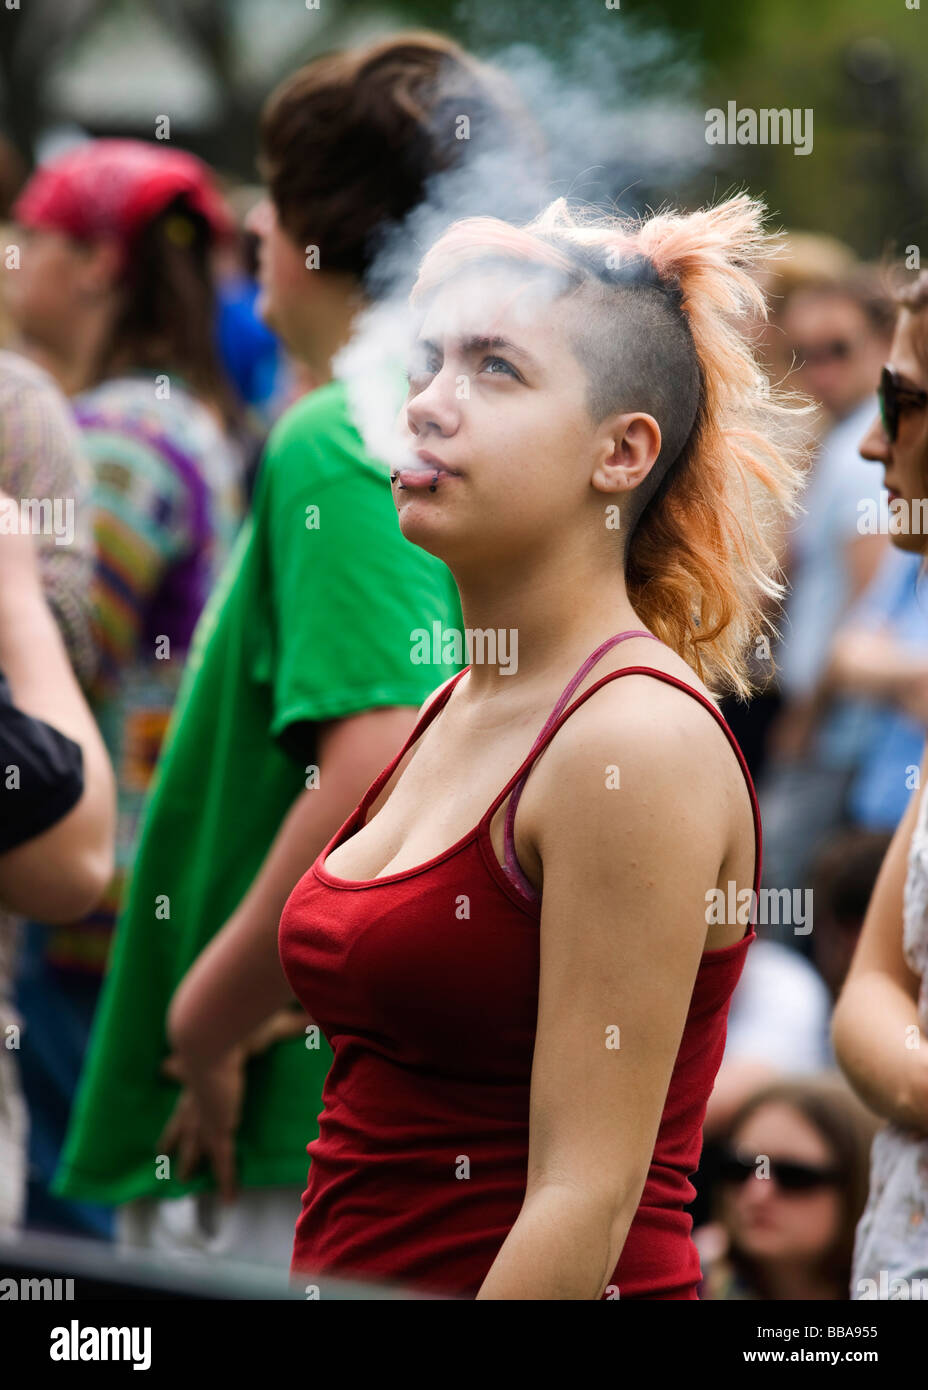 Smoking teen female with Mohawk haircut Stock Photo